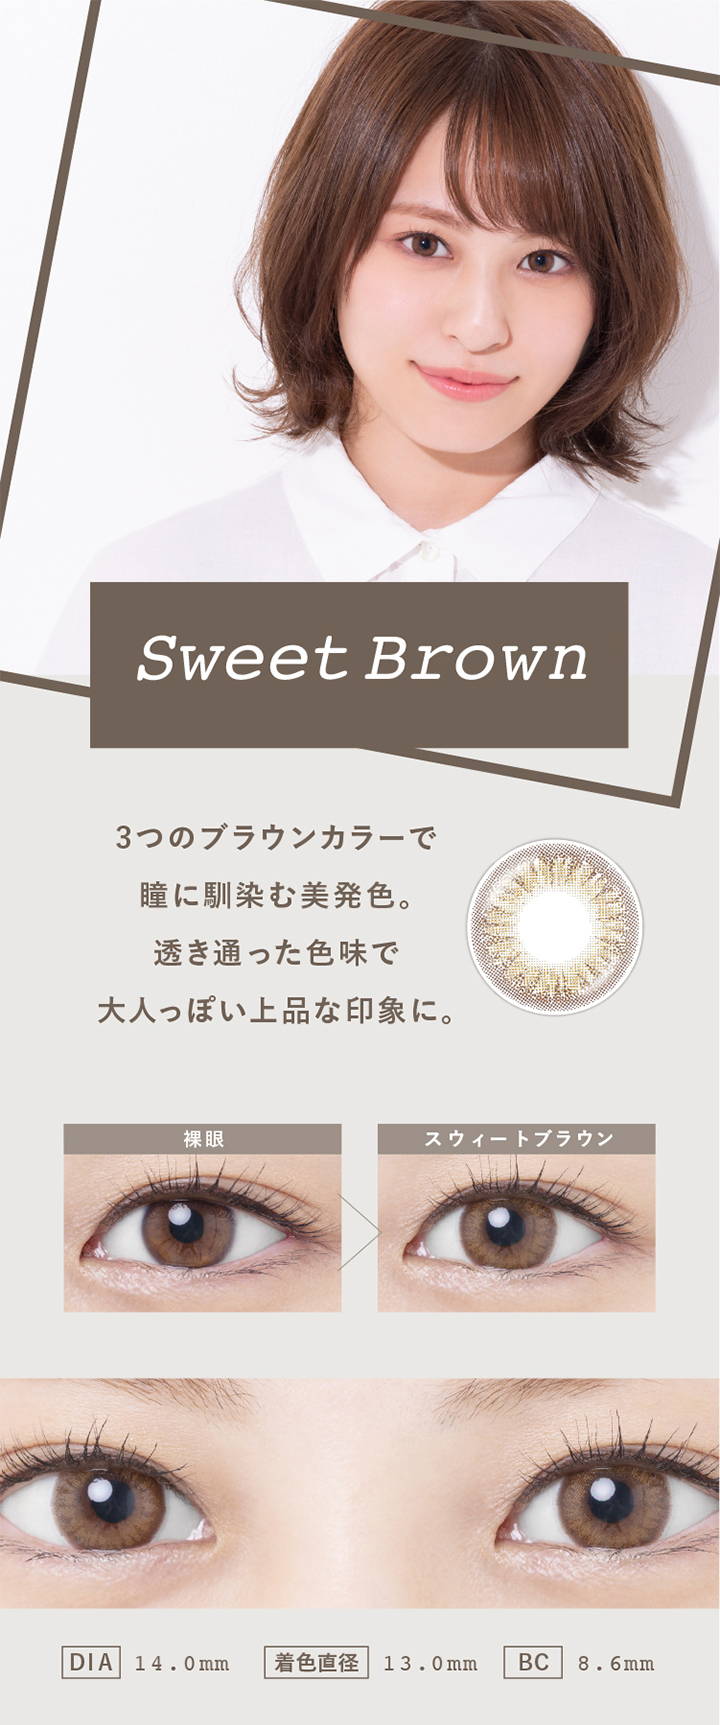 Sweet Brown(スウィートブラウン),3つのブラウンカラーで瞳に馴染む美発色。透き通った色味で大人っぽい上品な印象に,裸眼とスウィートブラウンの装用写真の比較,DIA14.0mm,着色直径13.0mm,BC8.6mm|スウィートハート(SweetHeart)コンタクトレンズ